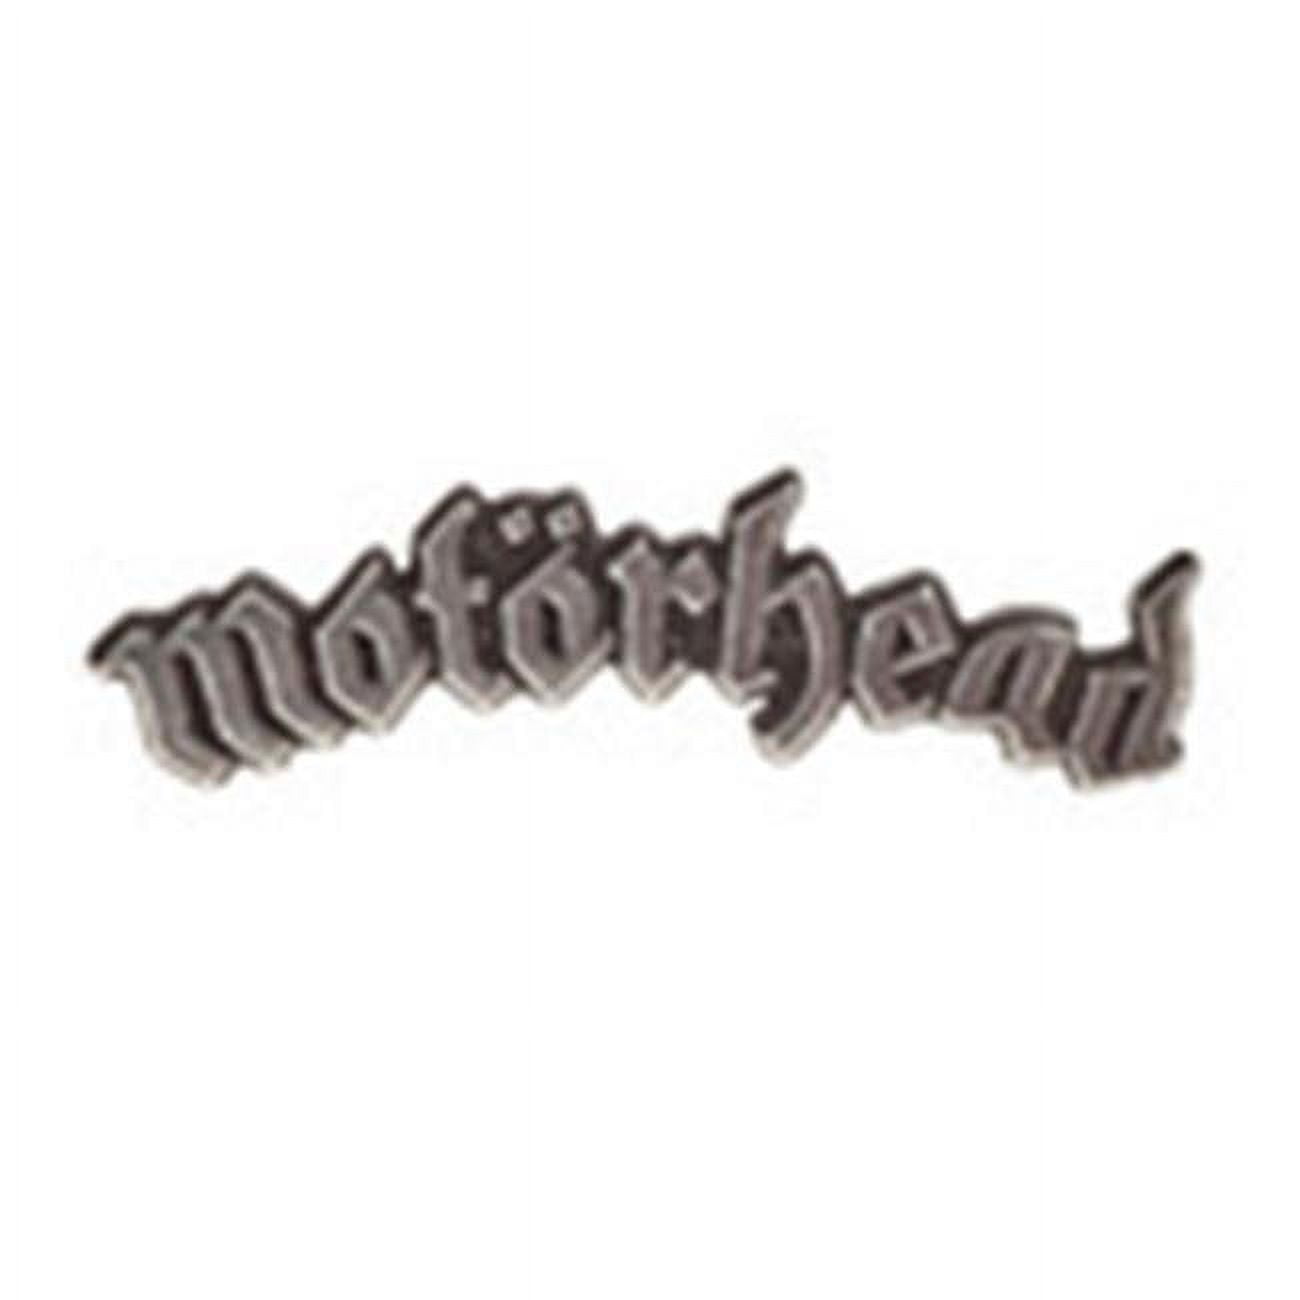 Pc501 Motorhead - Pin Badge Logo